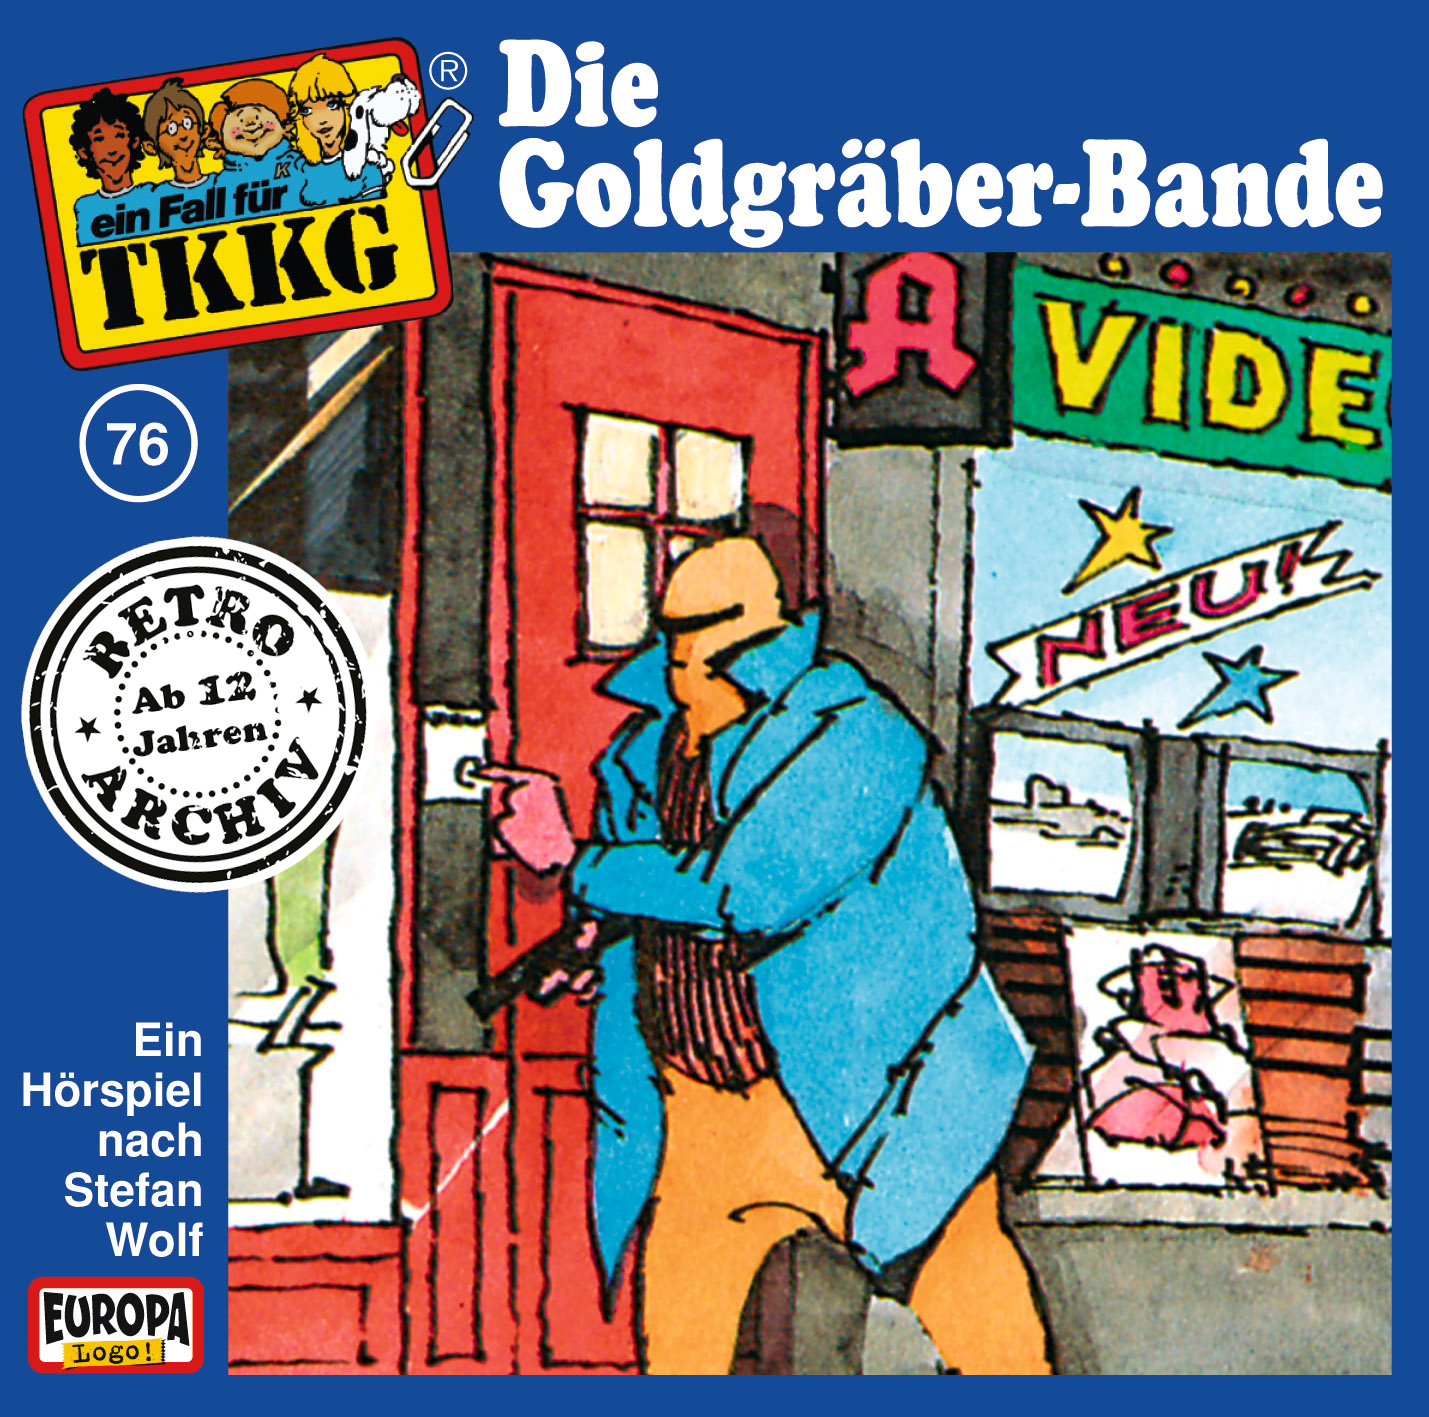 TKKG Retro-Archiv - Die Goldgräber-Bande